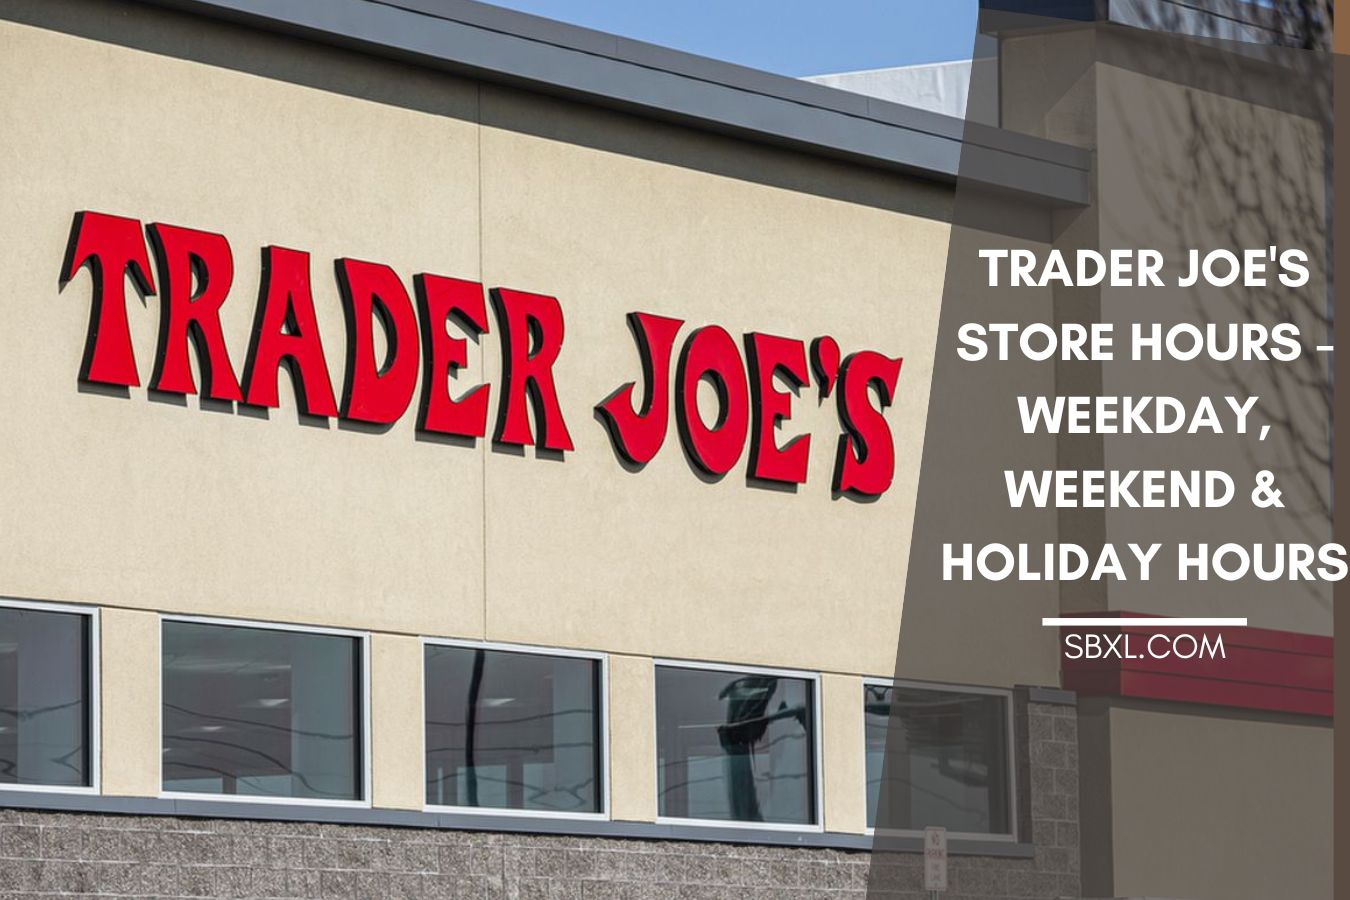 Trader Joe's Store Hours - Weekday, Weekend & Holiday Hours